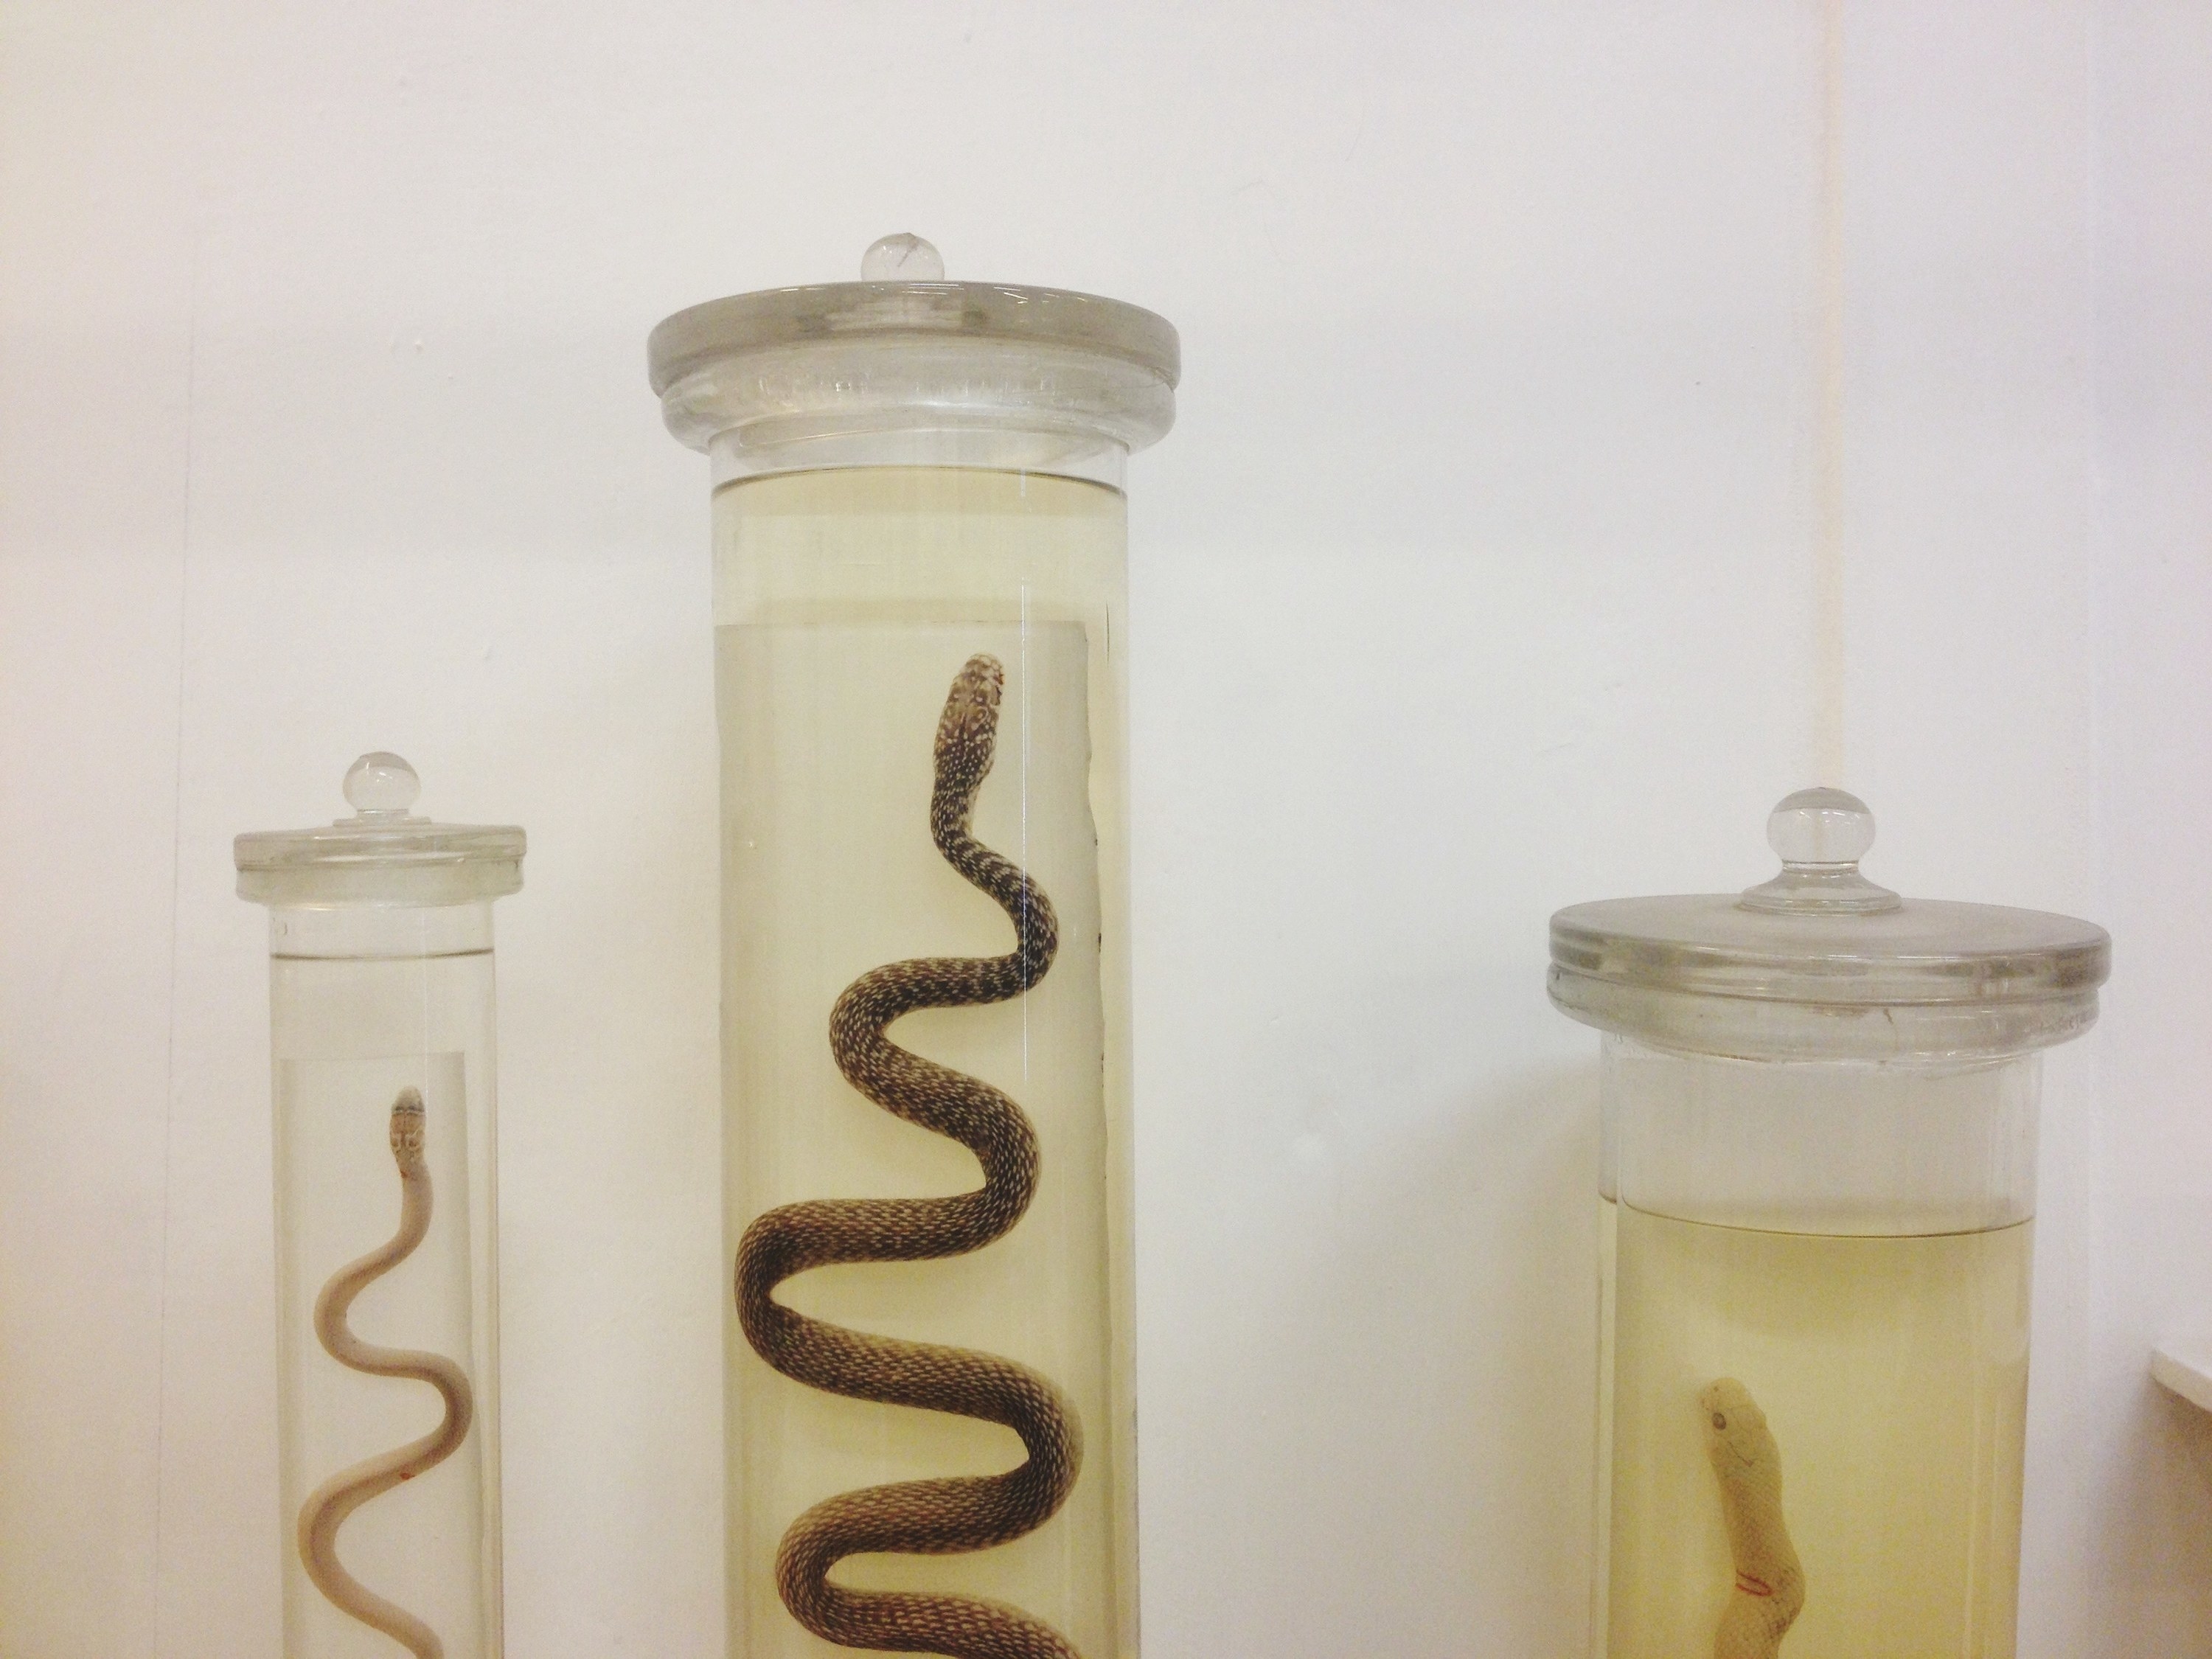 Three snakes in three glass jars